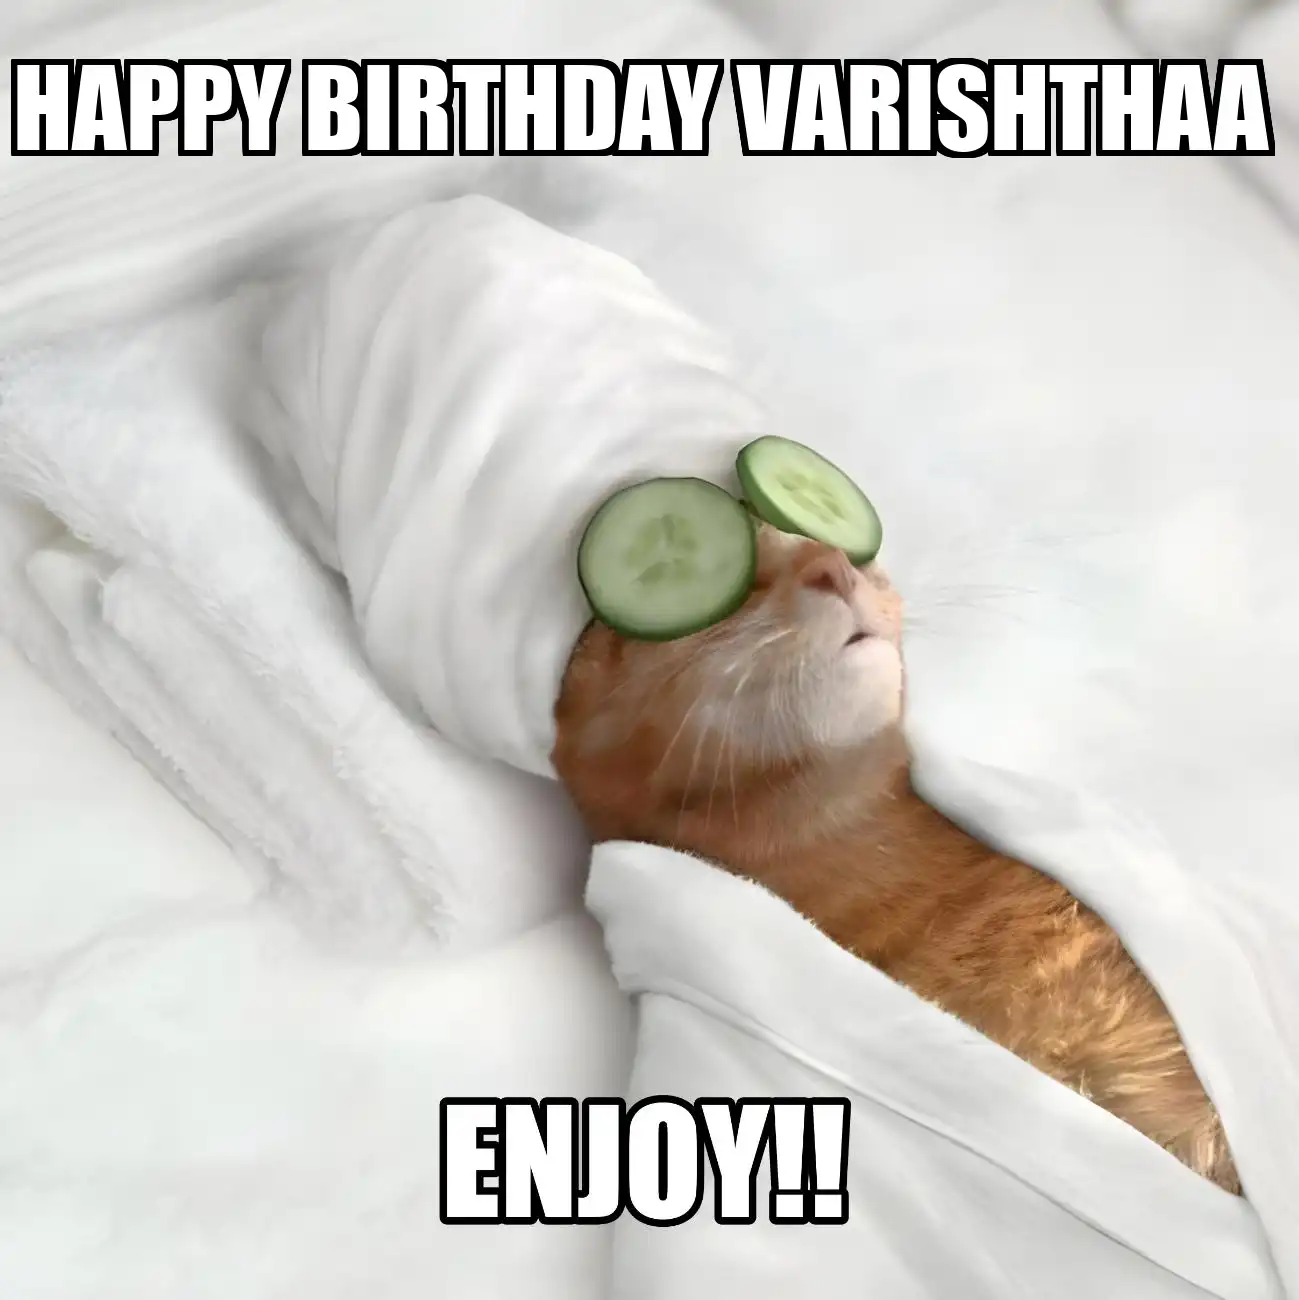 Happy Birthday Varishthaa Enjoy Cat Meme